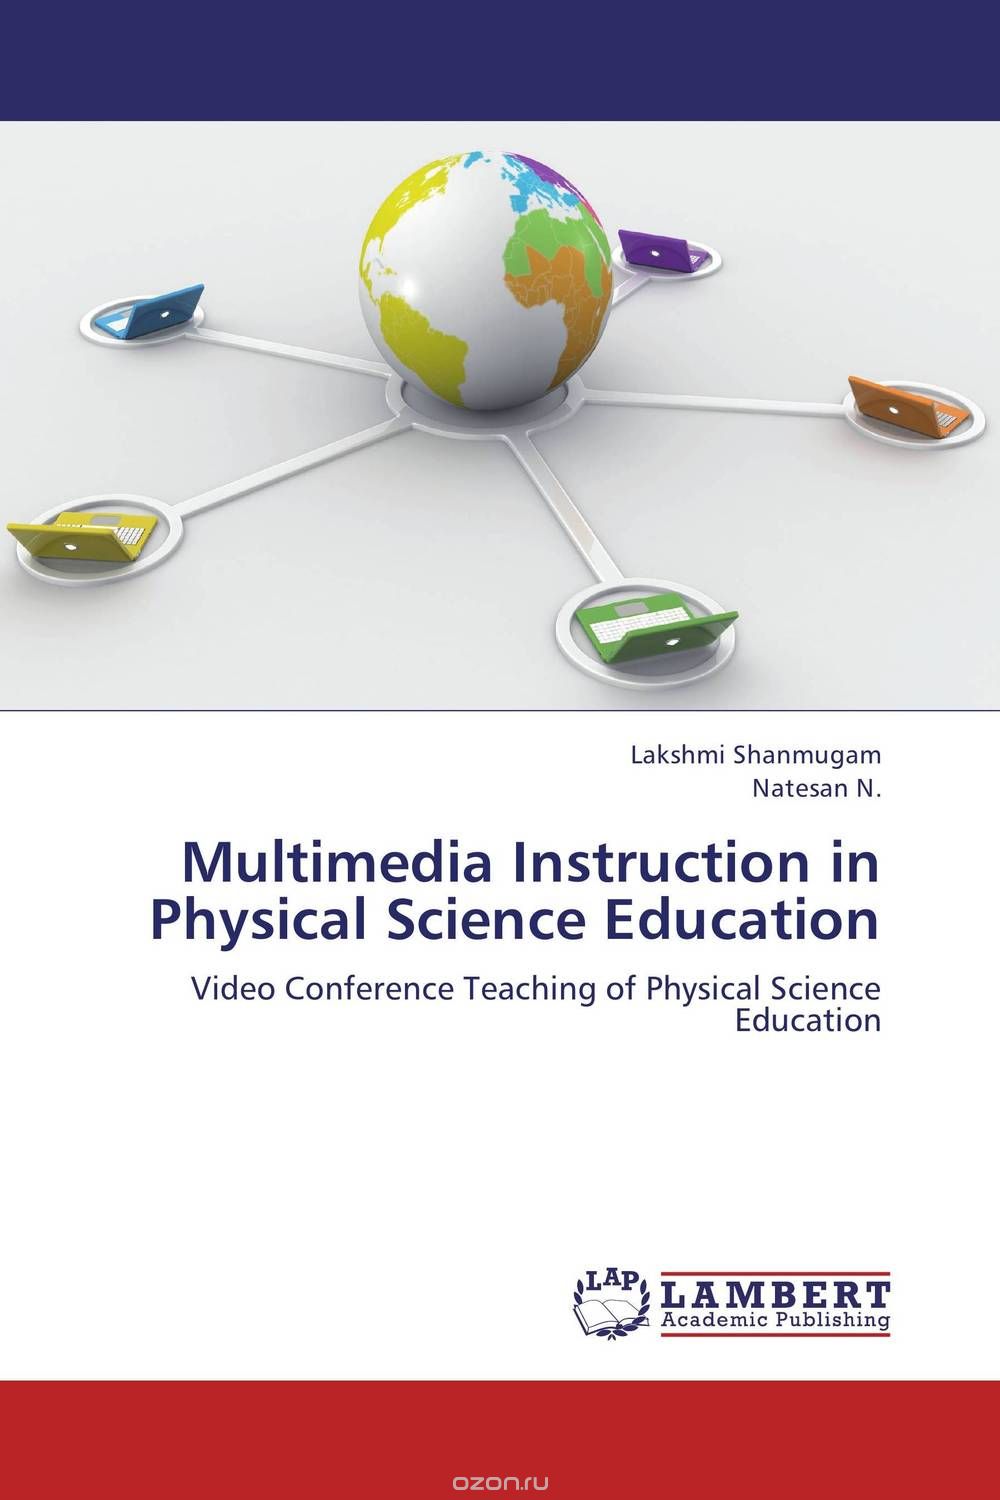 Скачать книгу "Multimedia Instruction in Physical Science Education"